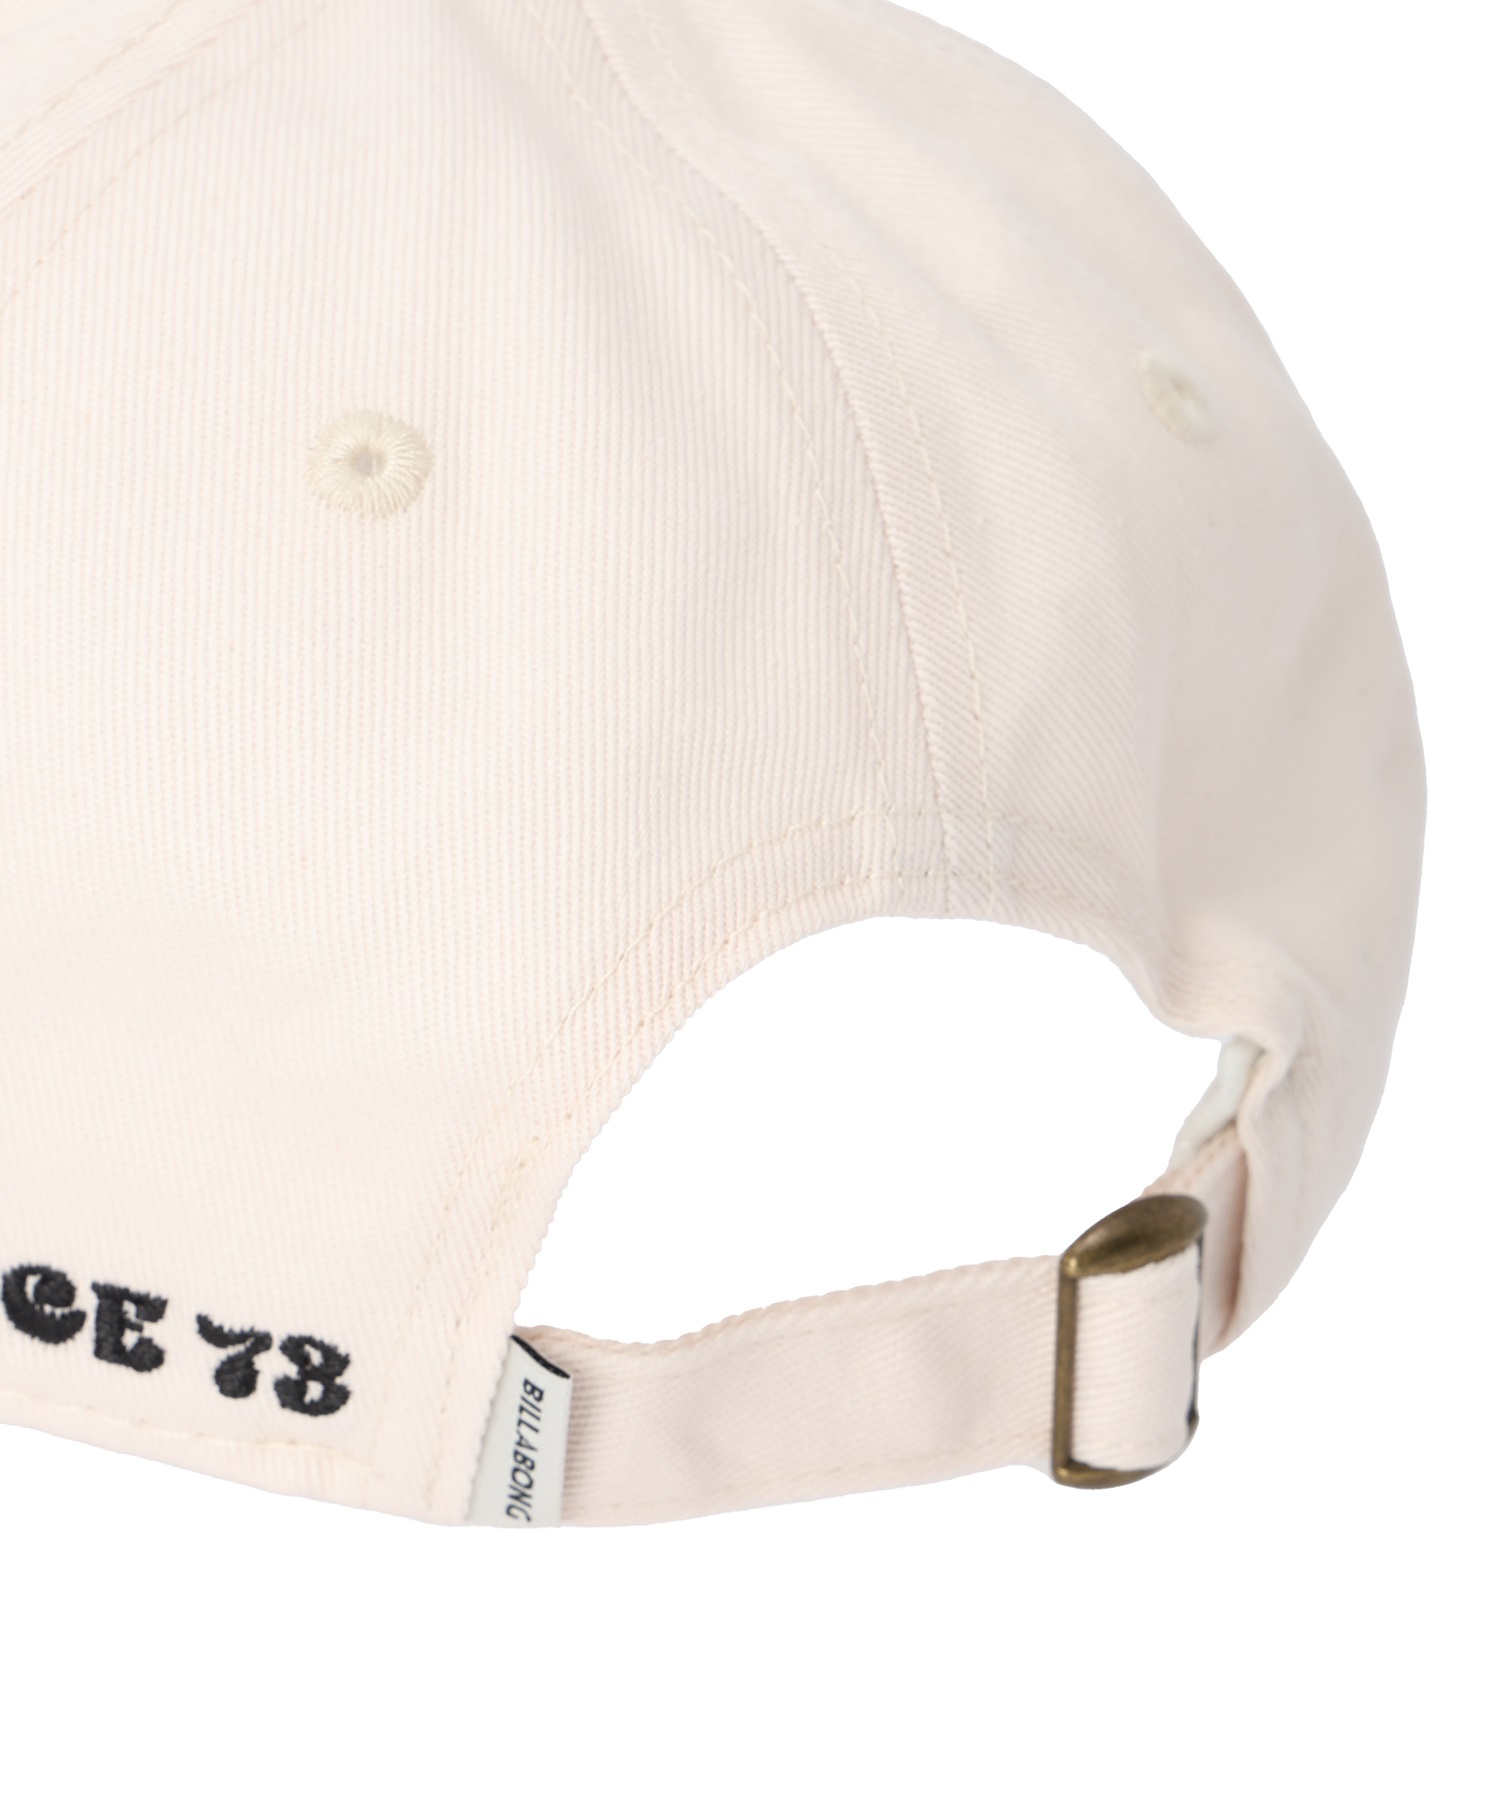 BILLABONG ビラボン CAP  BE015-991 キッズ キャップ(BEG-F)